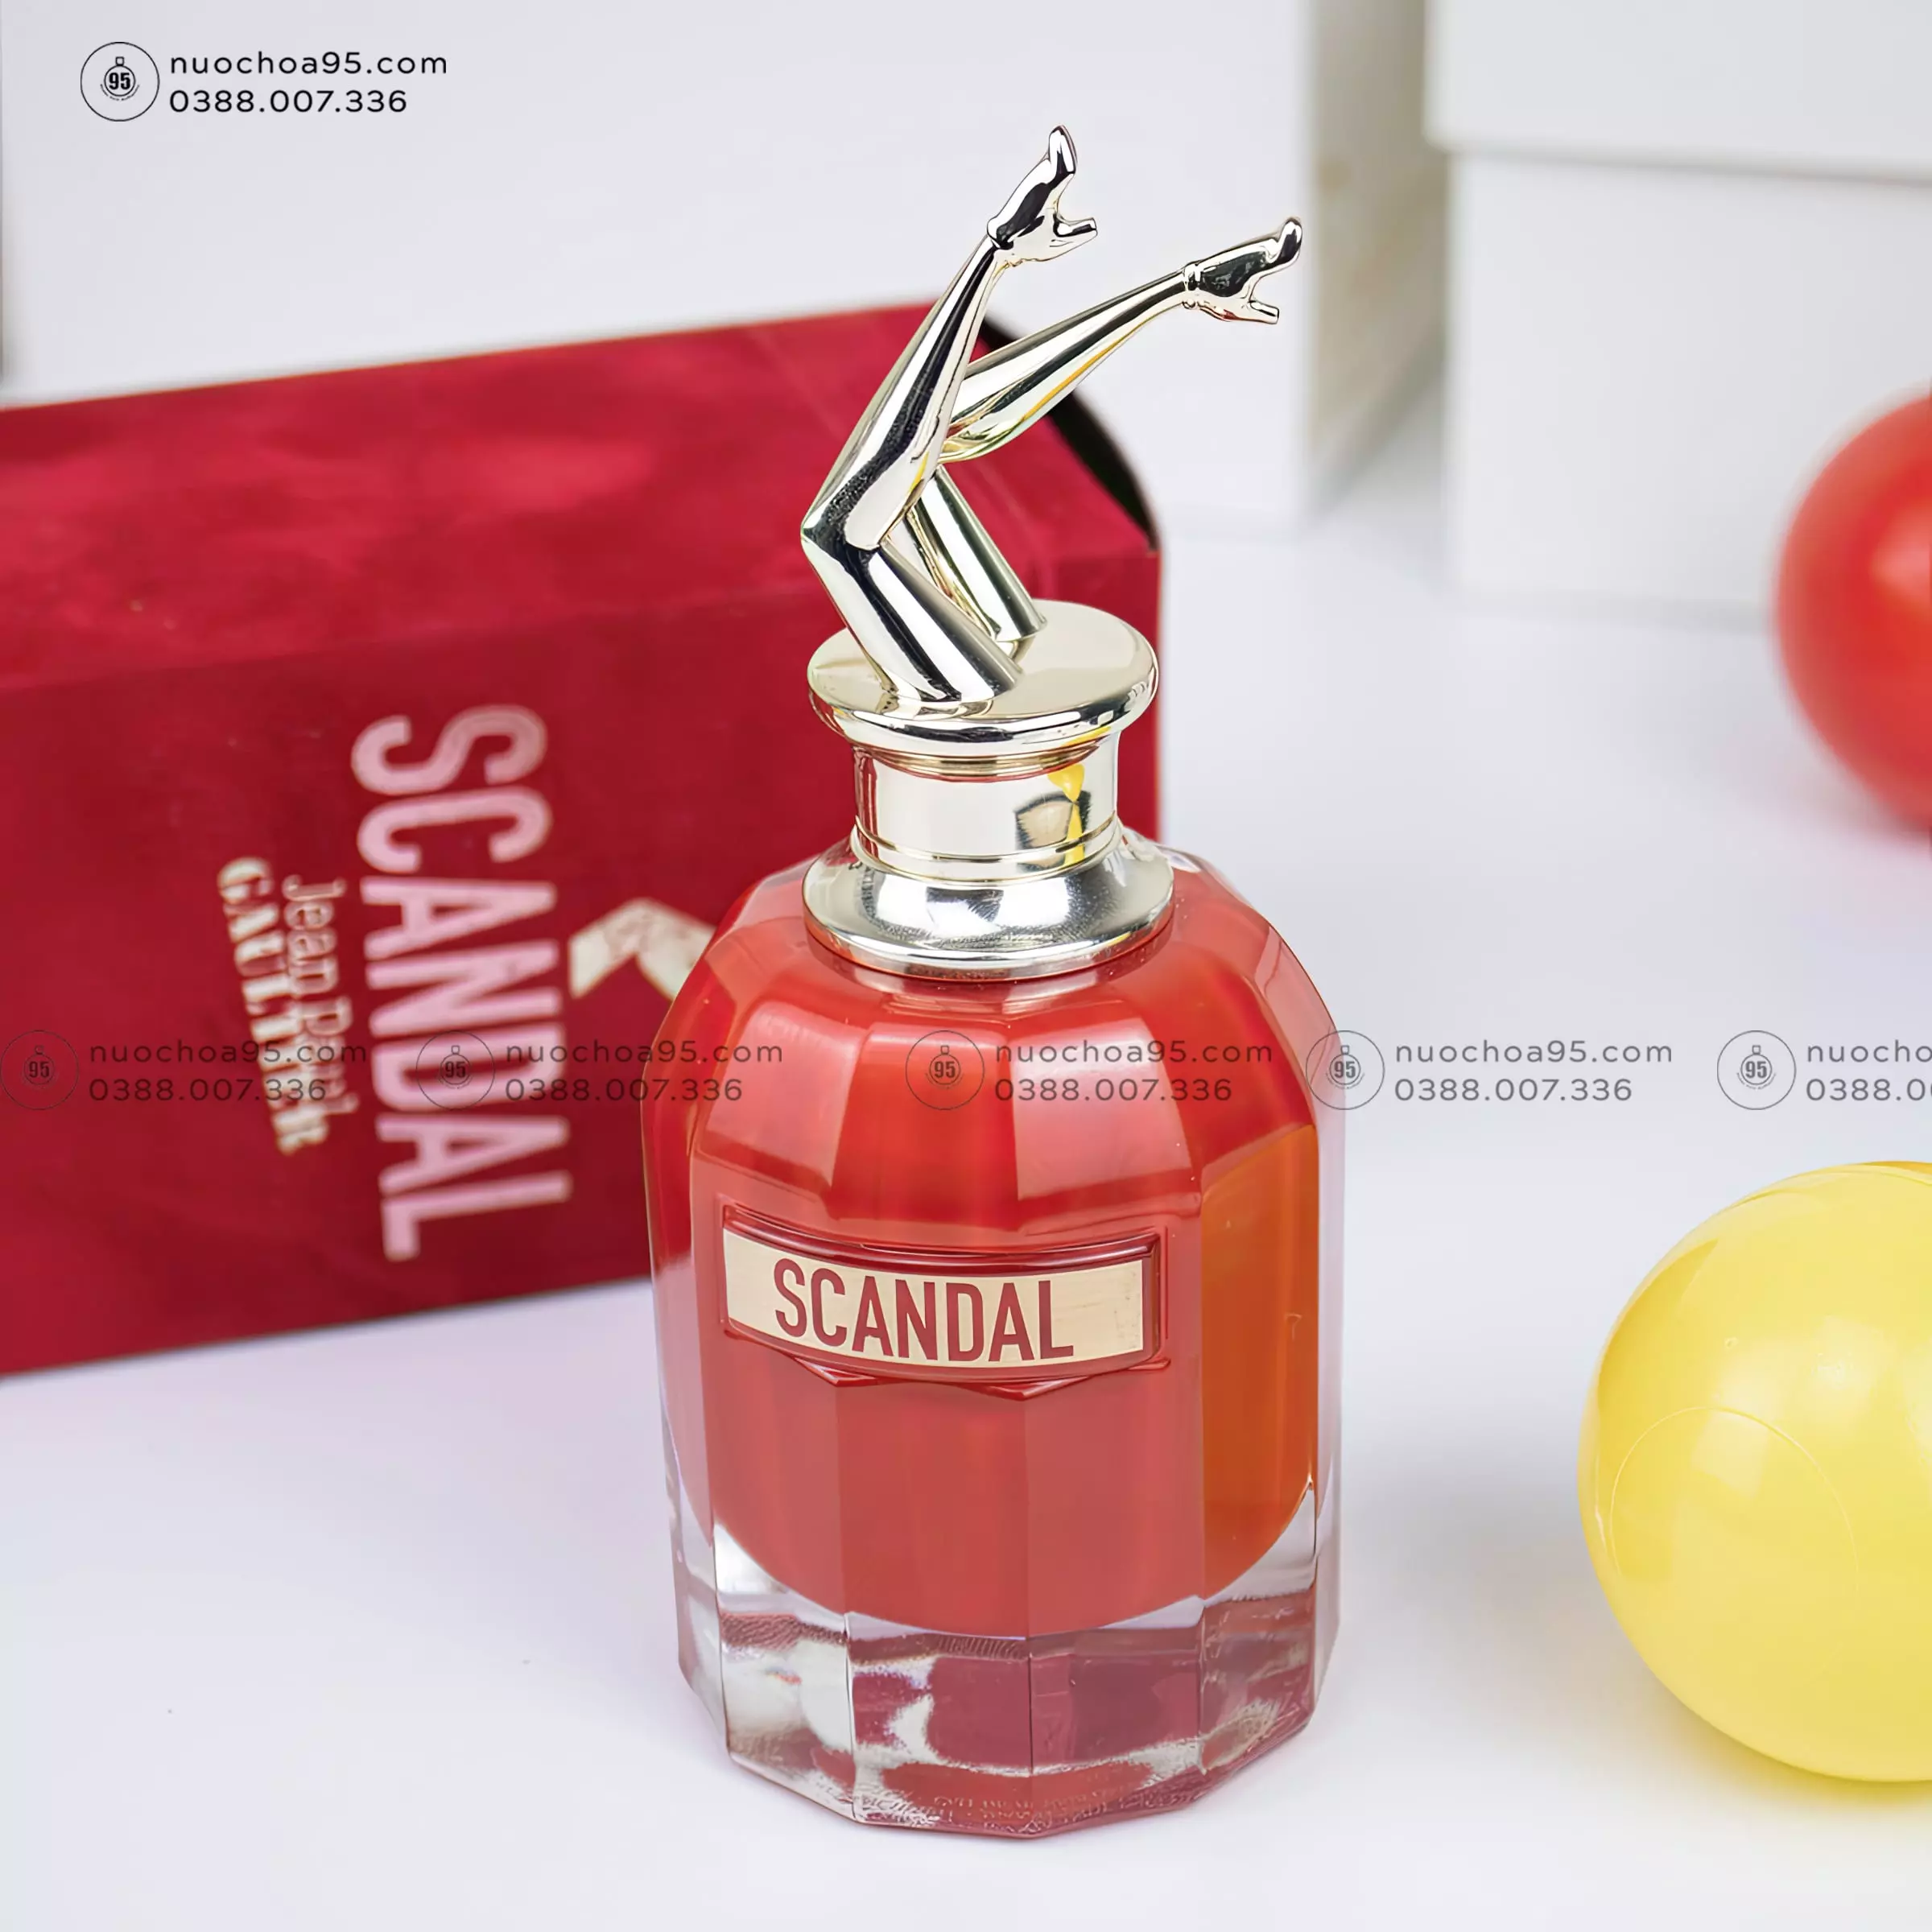 Nước hoa Jean Paul Gaultier Scandal Le Parfum - Ảnh 1